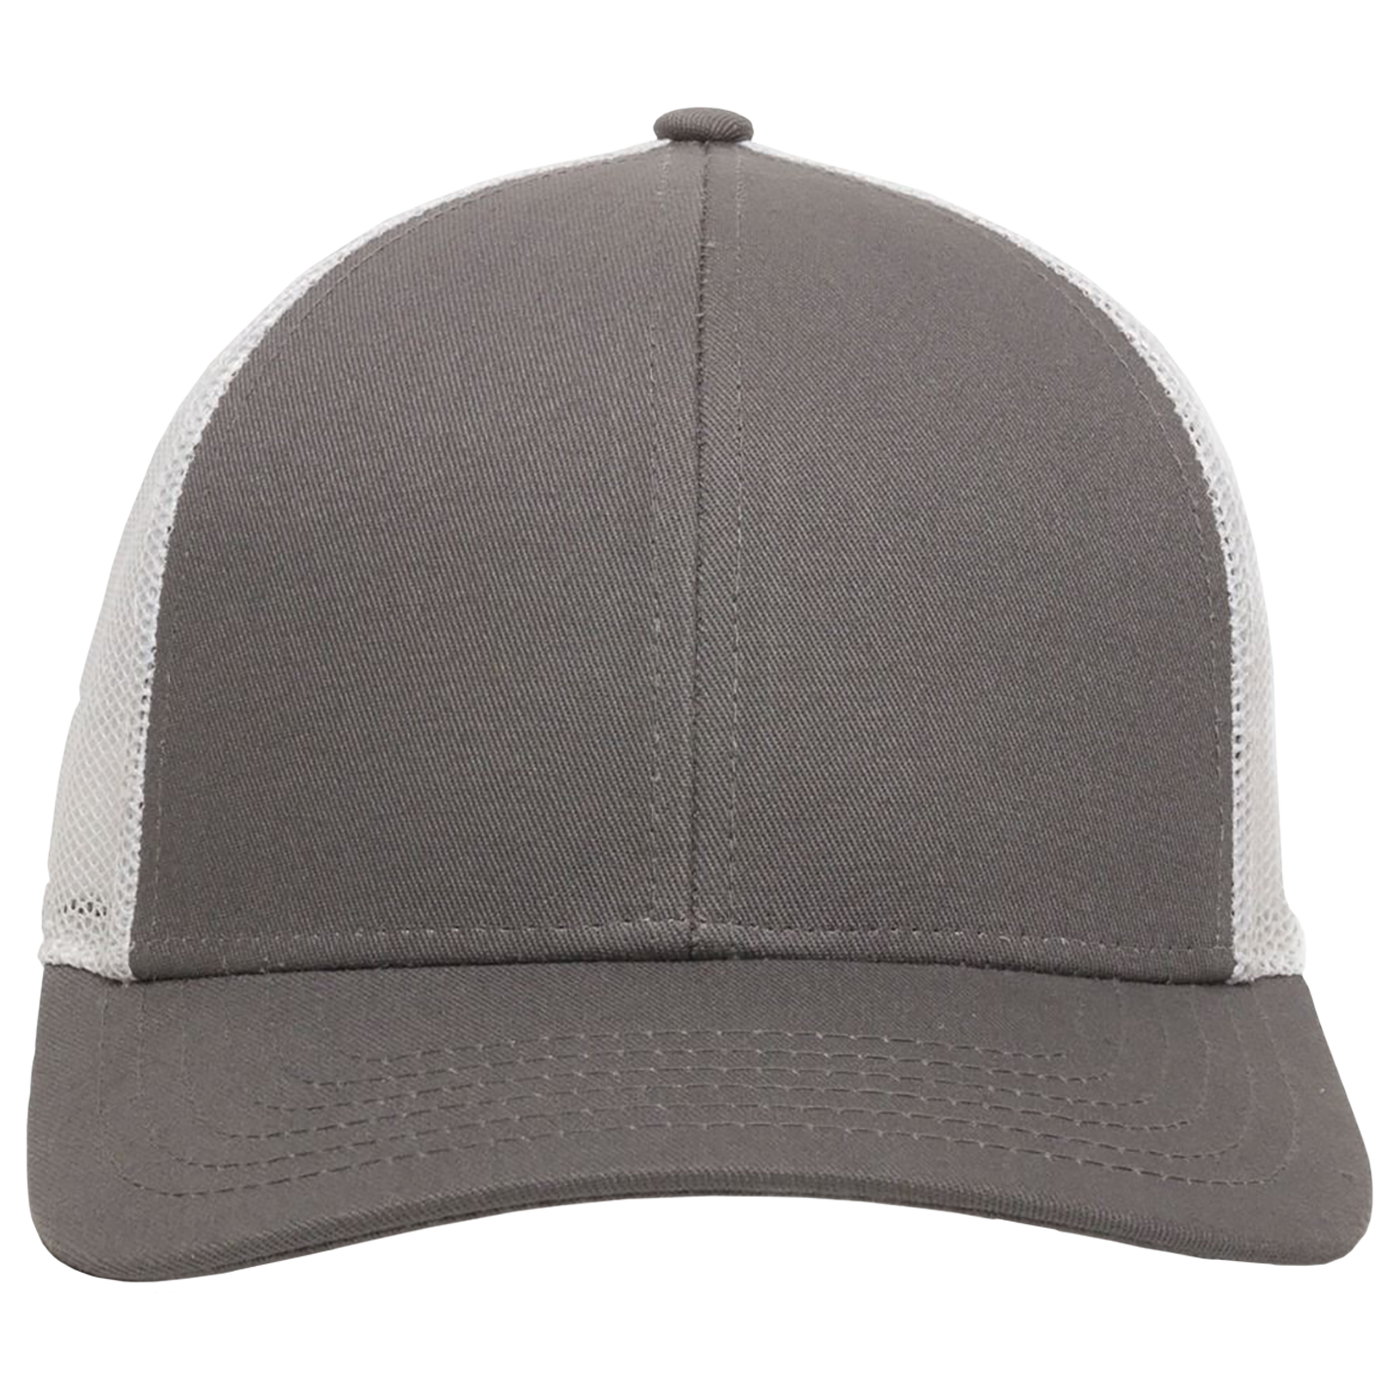 Premium Low Pro Trucker Hat - Black/white